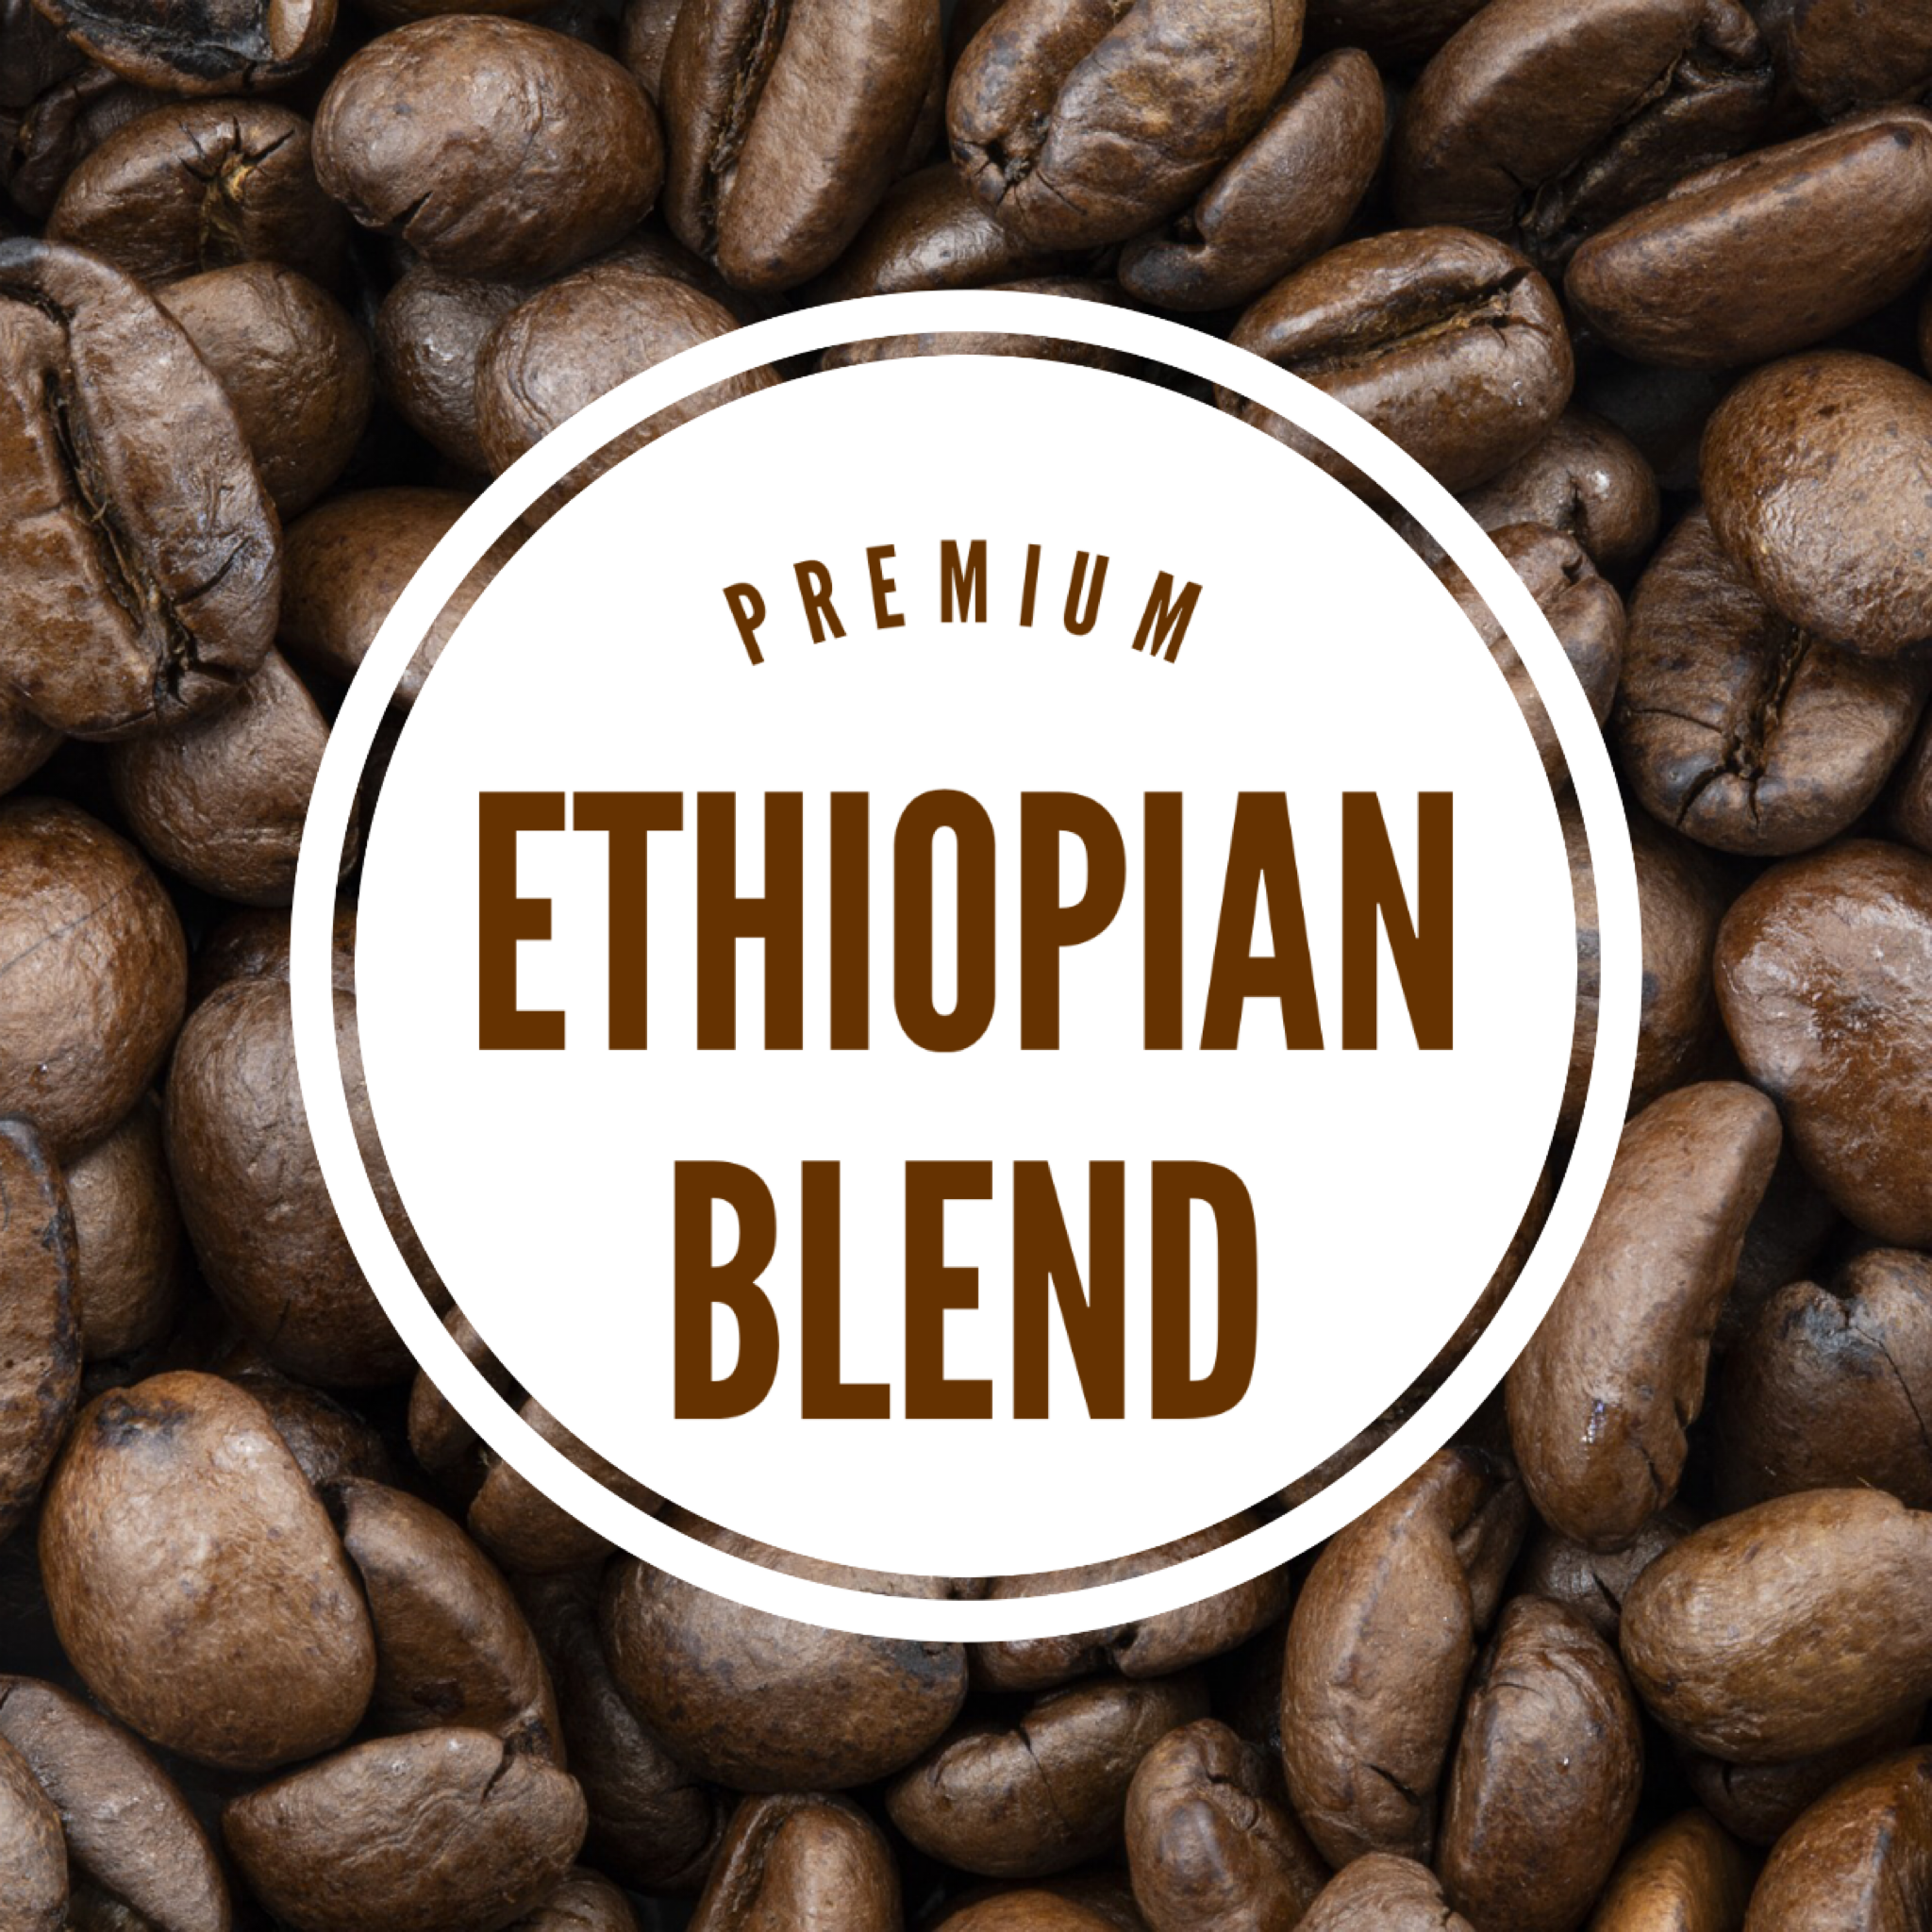 Djebena Coffees Premium Ethiopian Blend